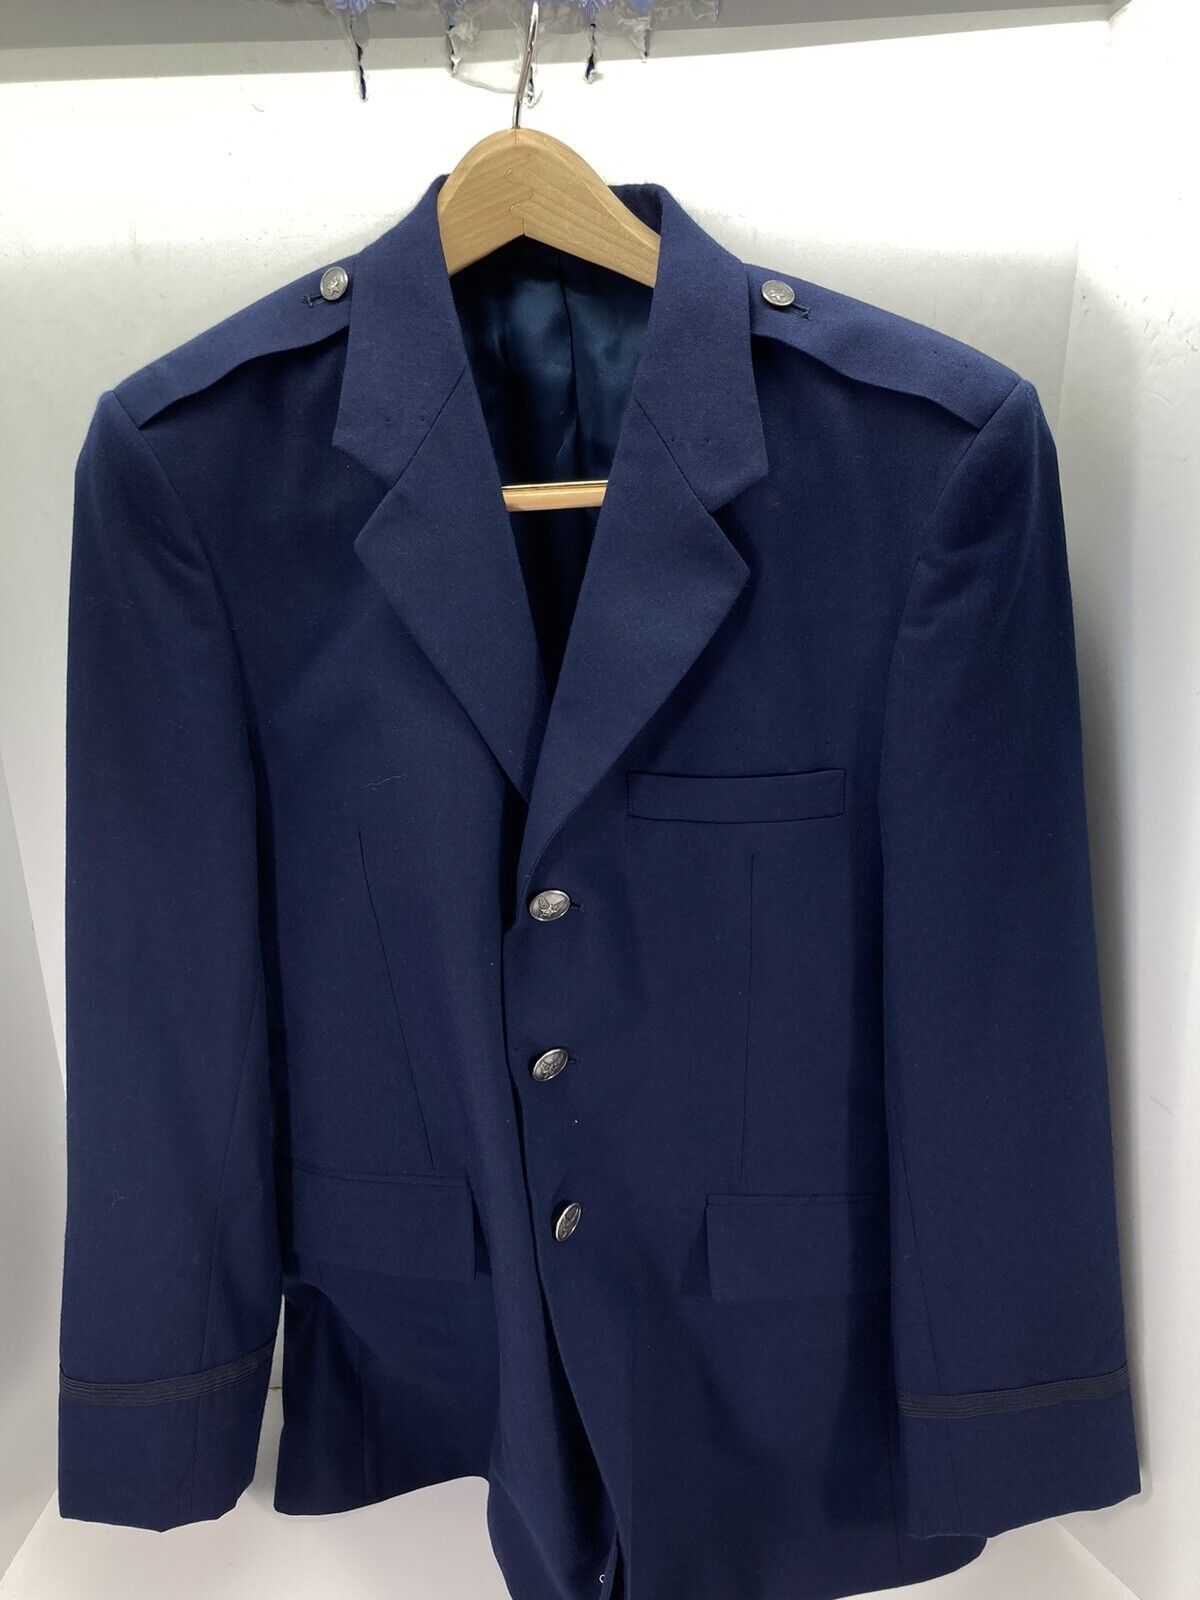 USAF Air Force Officer Service Dress Coat Jacket Men 41L Blue 3 Button Uniform